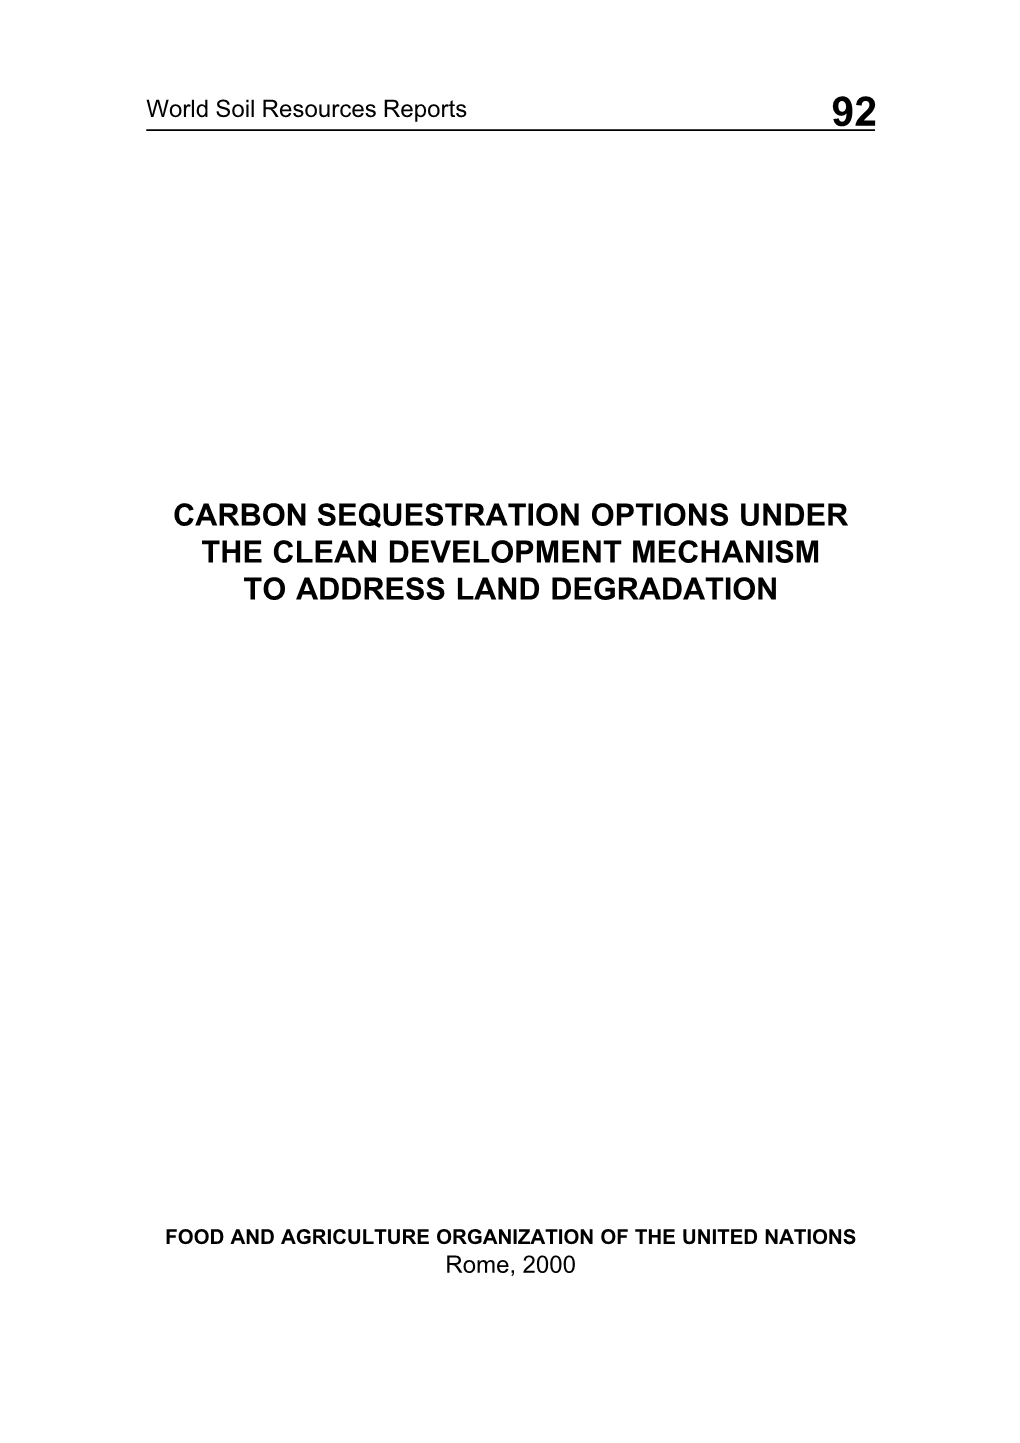 Carbon Sequestration Options Under the Clean Development Mechanism to Address Land Degradation